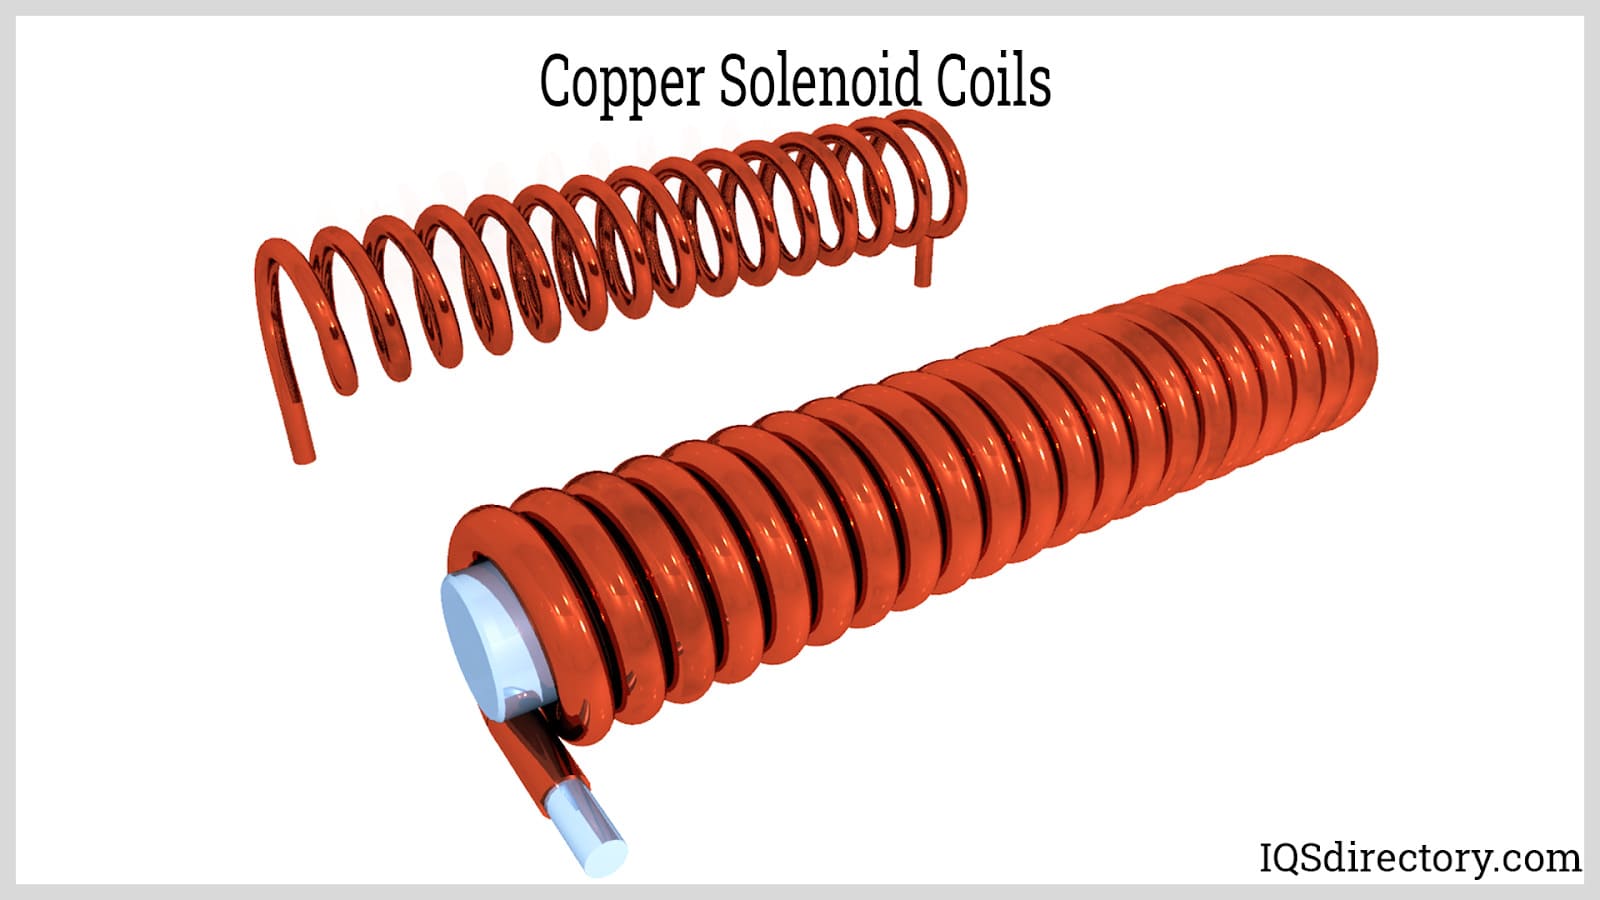 Copper Solenoid Coils